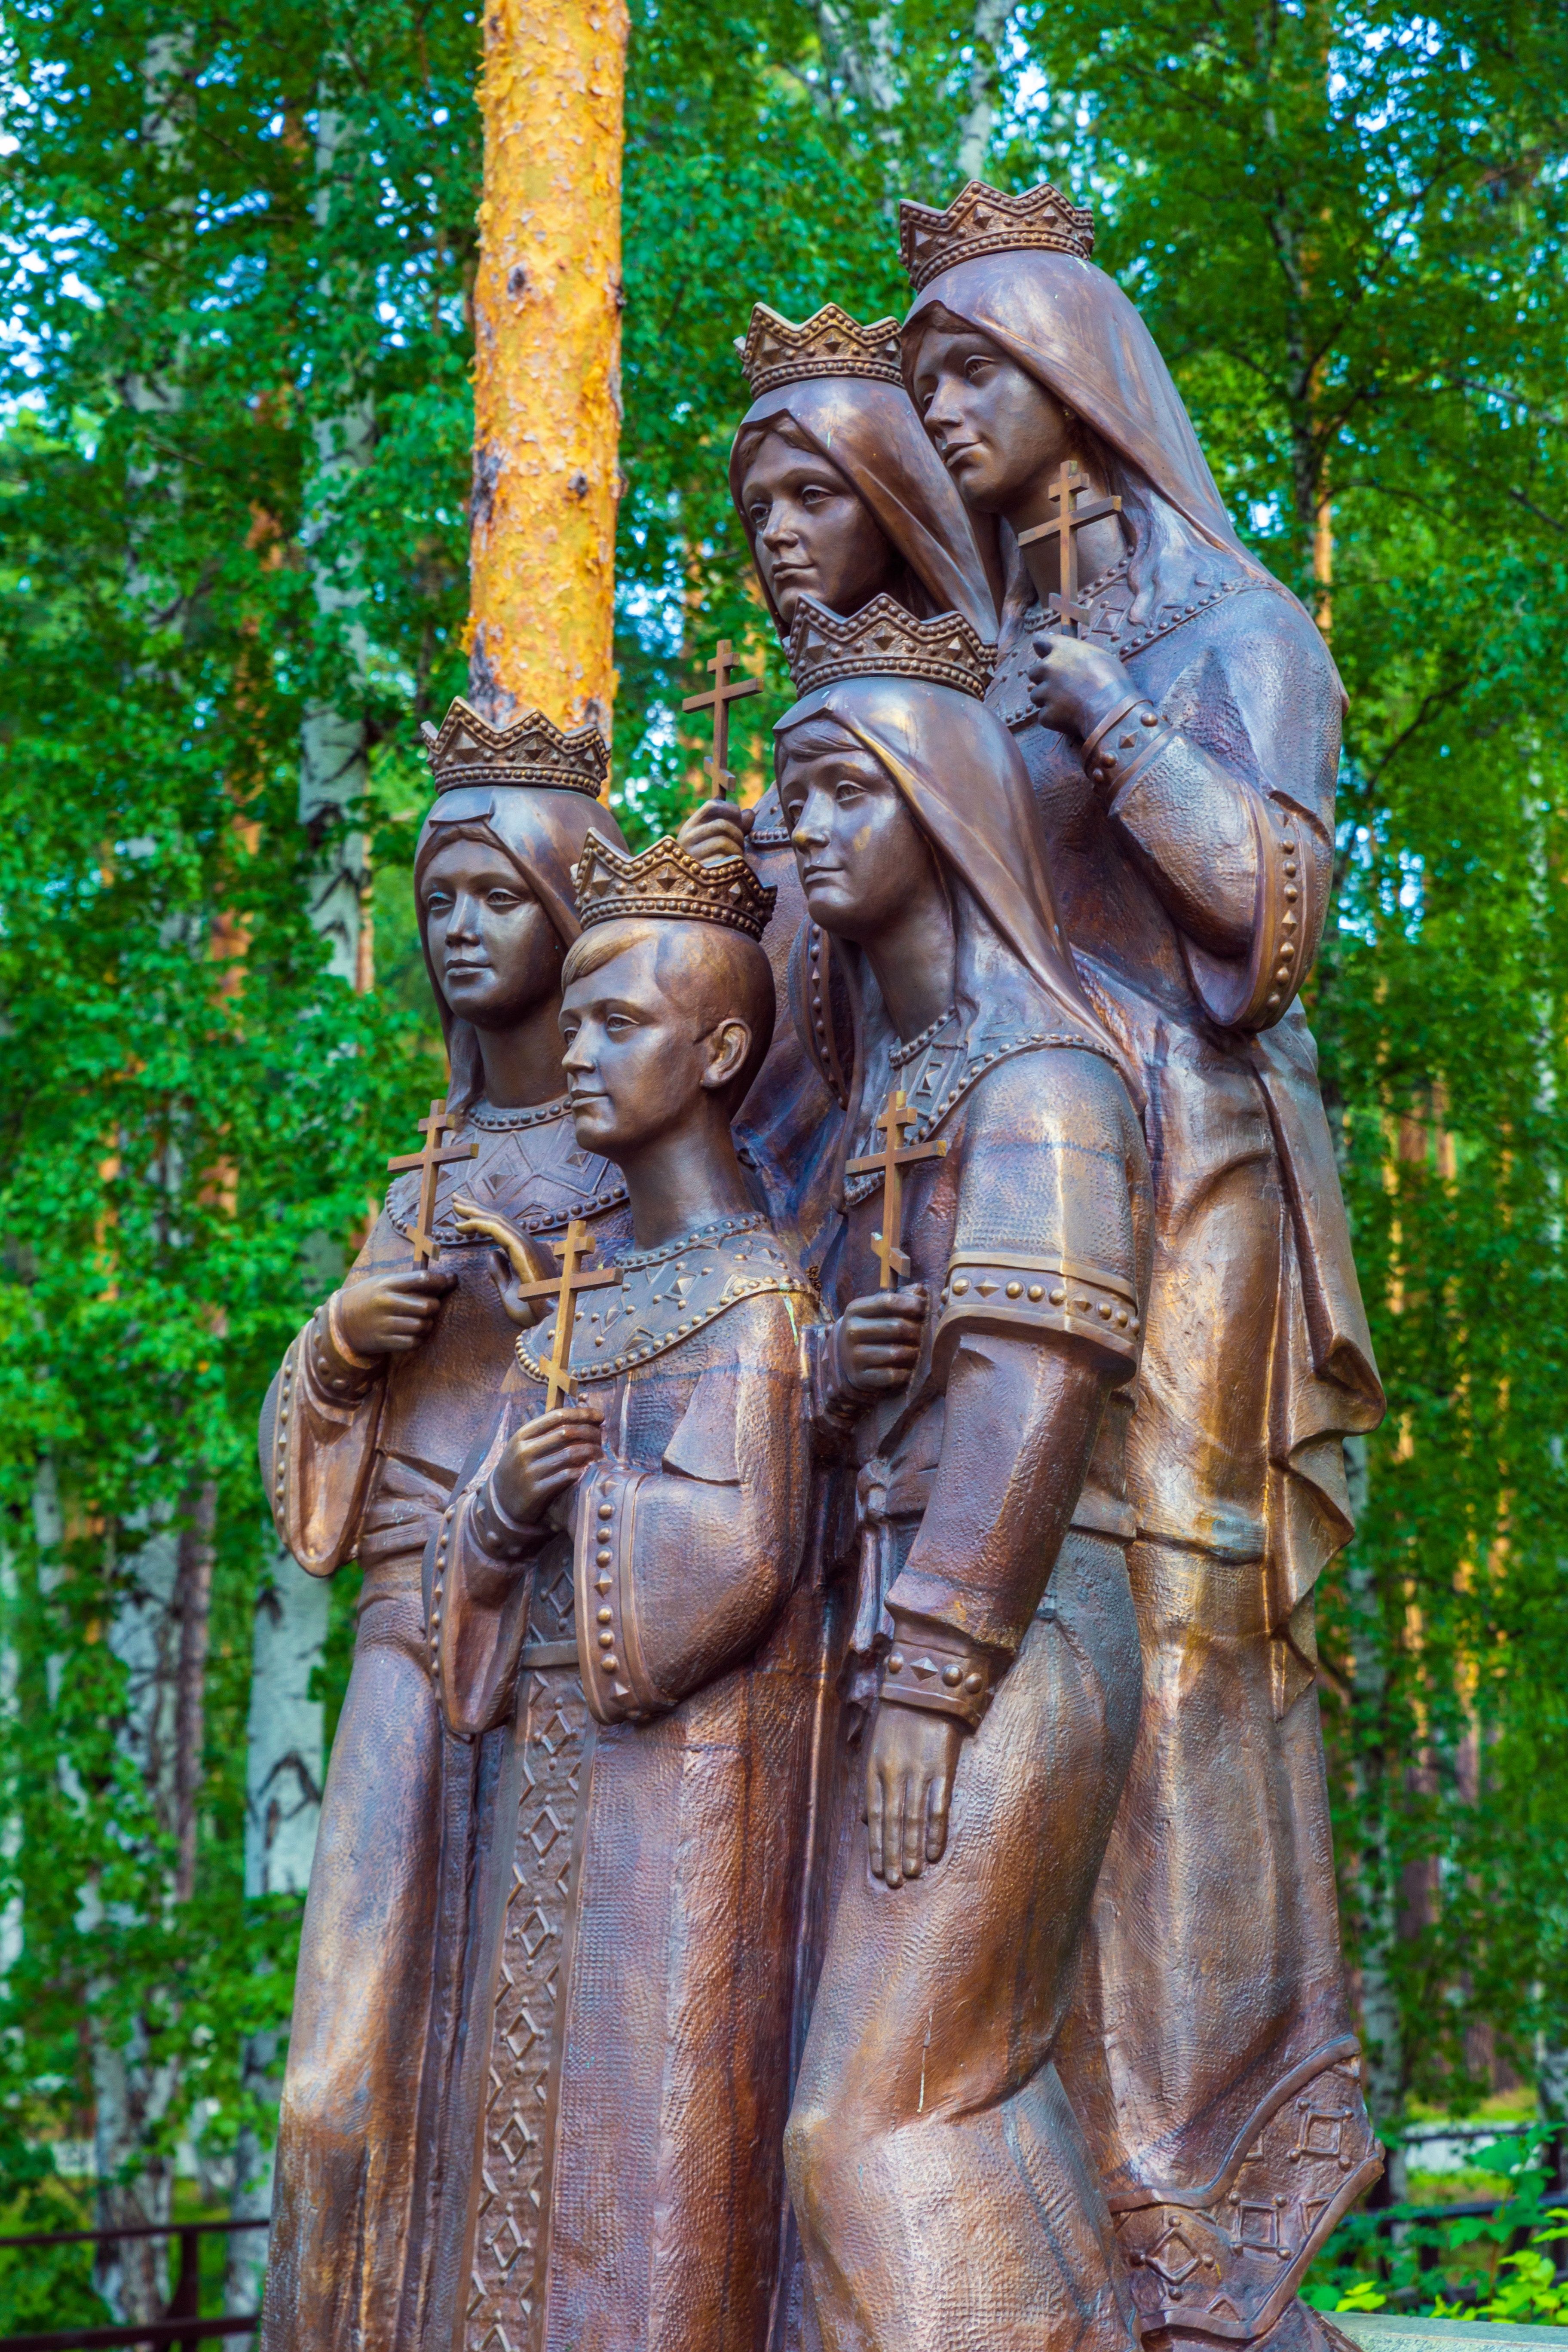 sculputure of romanov children in Russia, Yekaterinburg